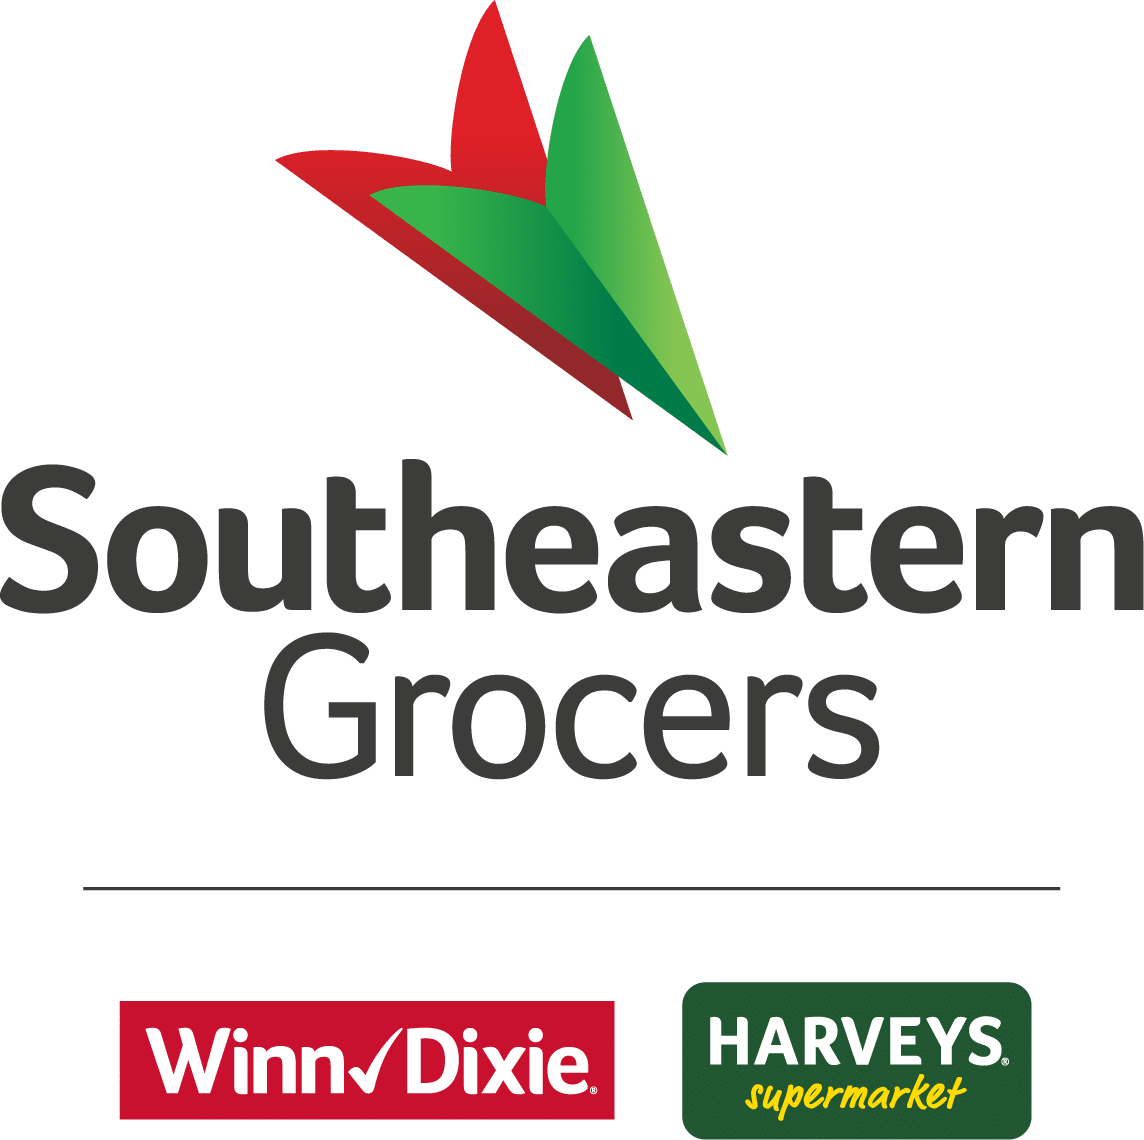 Southeastern Grocers logo